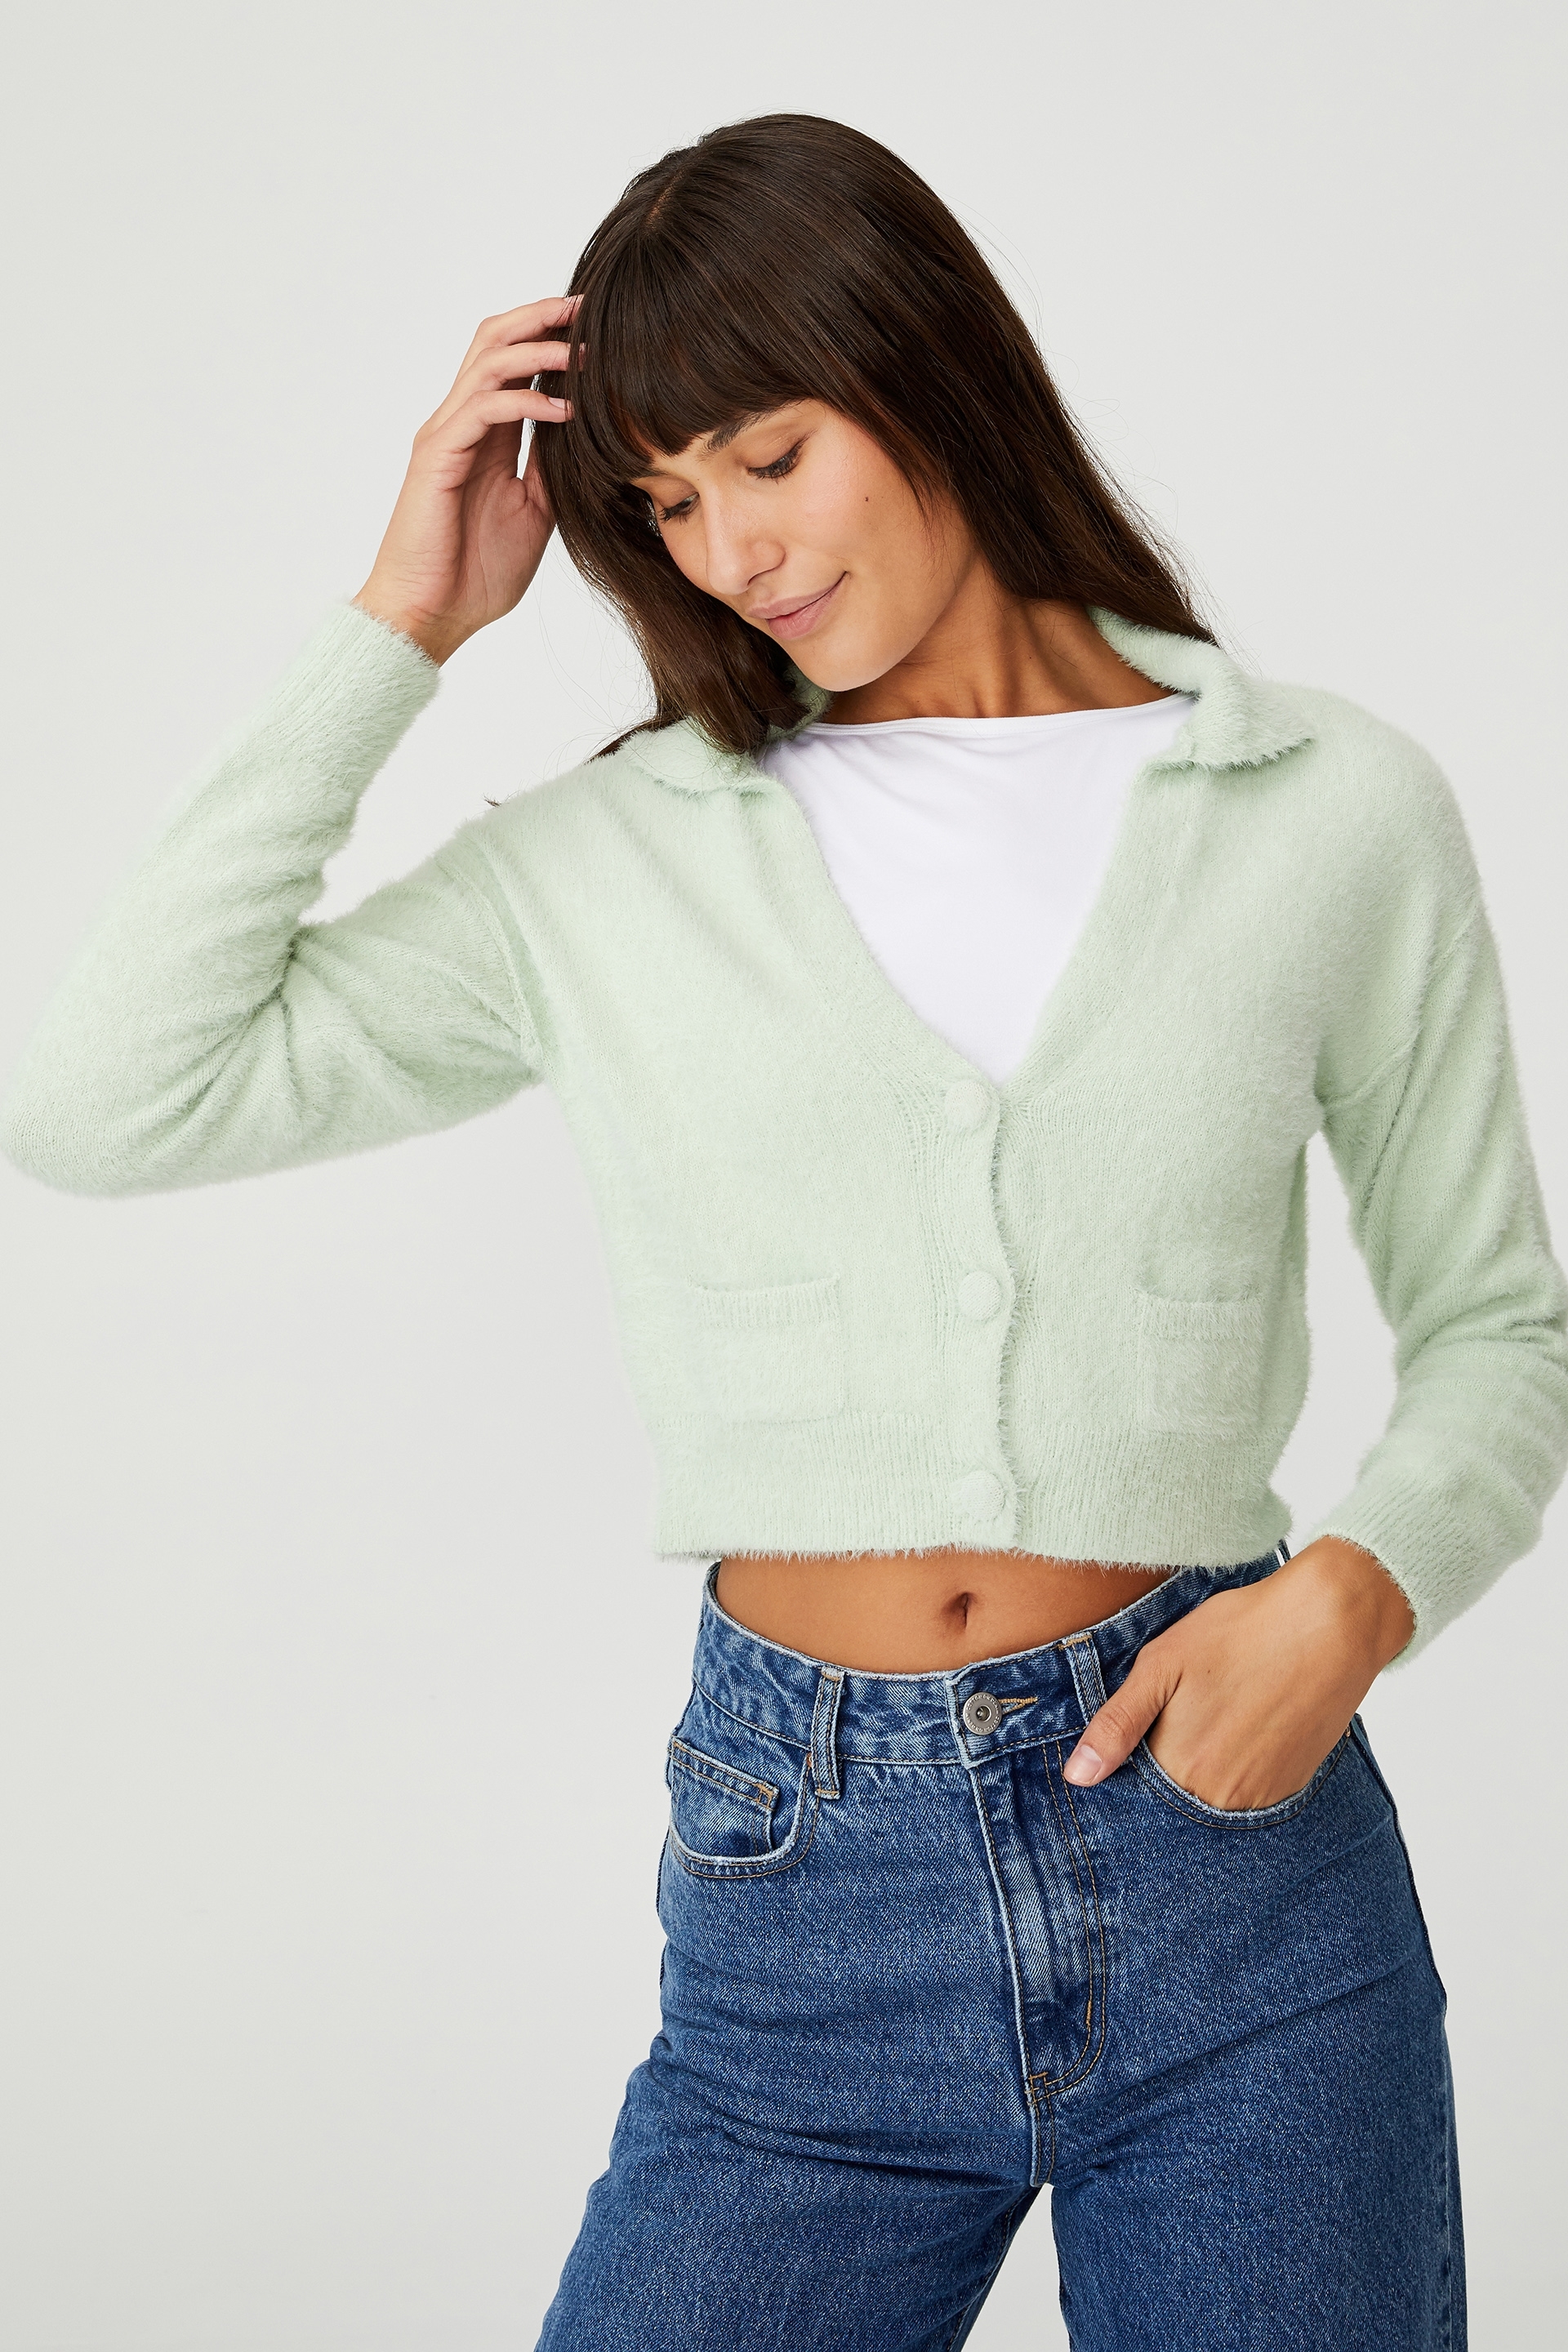 Cotton On Women - Super Luxe Super Crop Cardigan - Spring mint